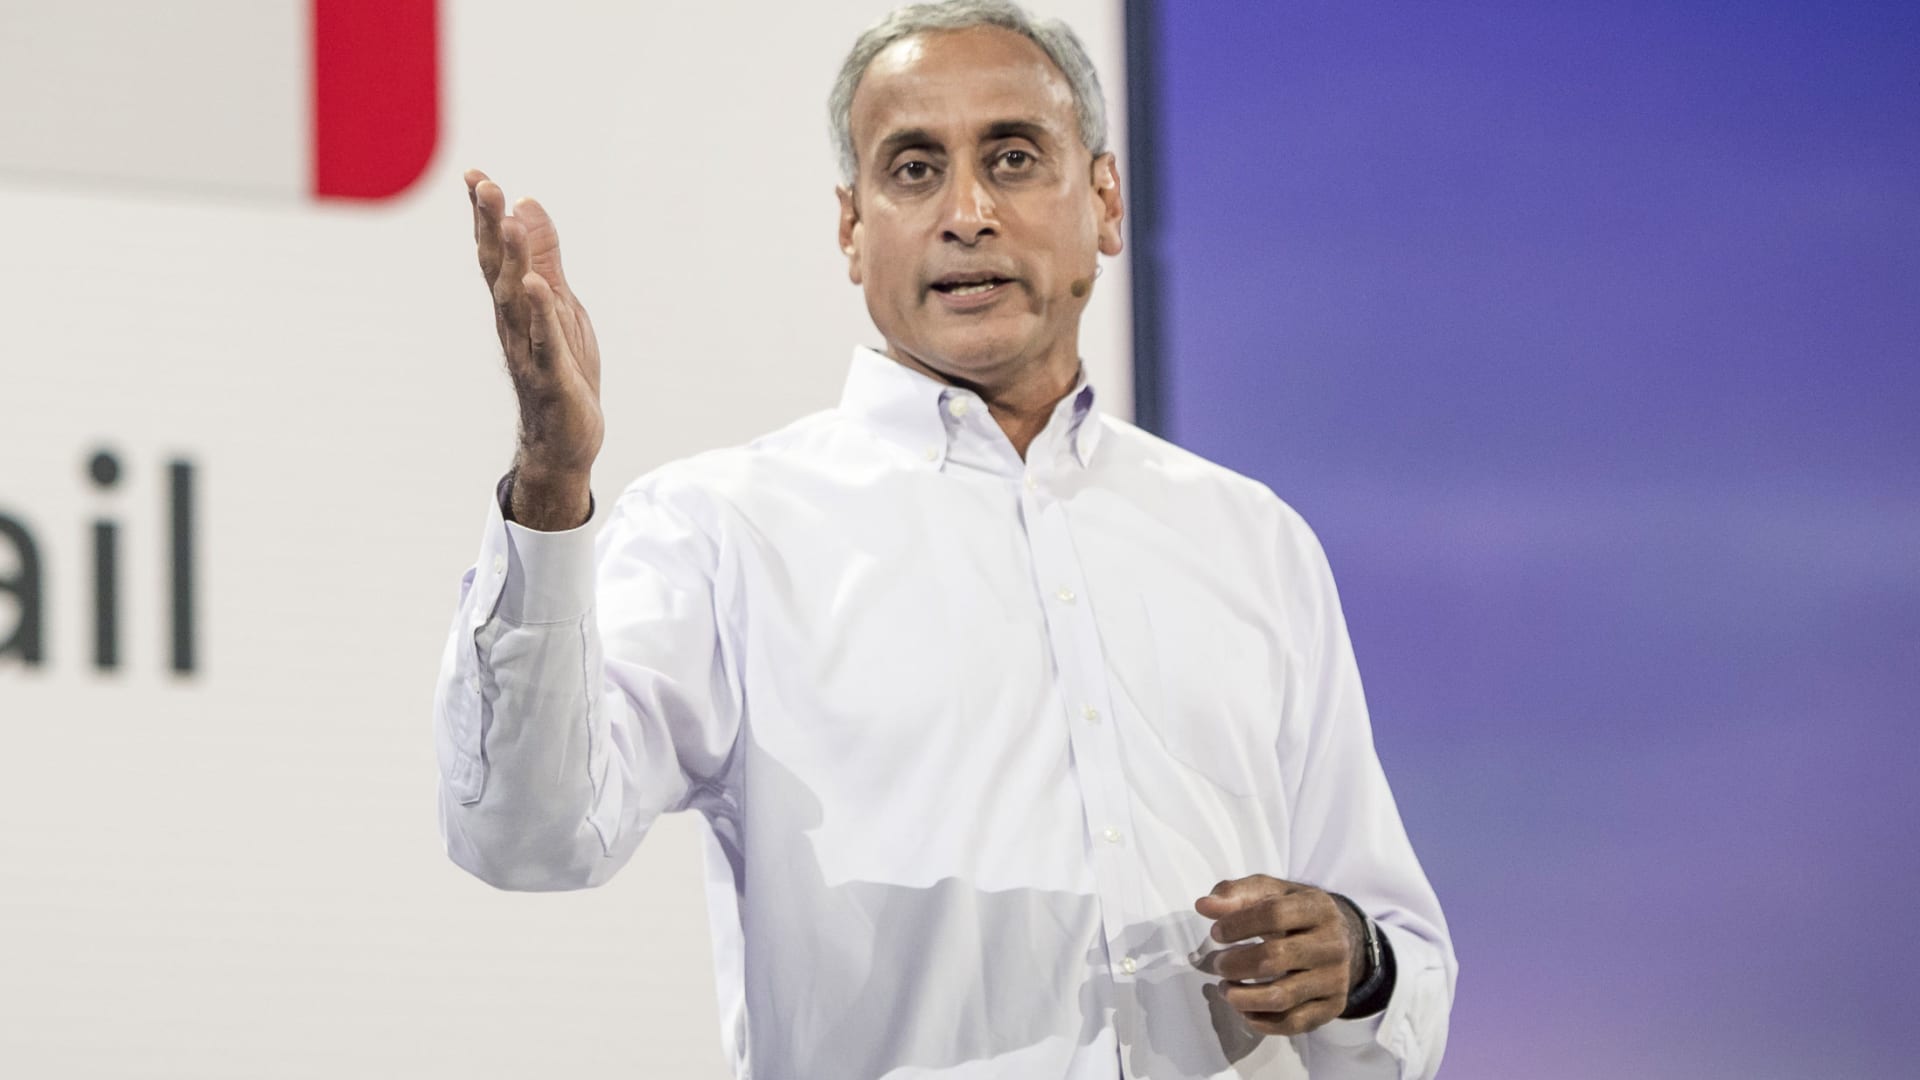 Google search boss Raghavan warns employees of 'new operating reality'